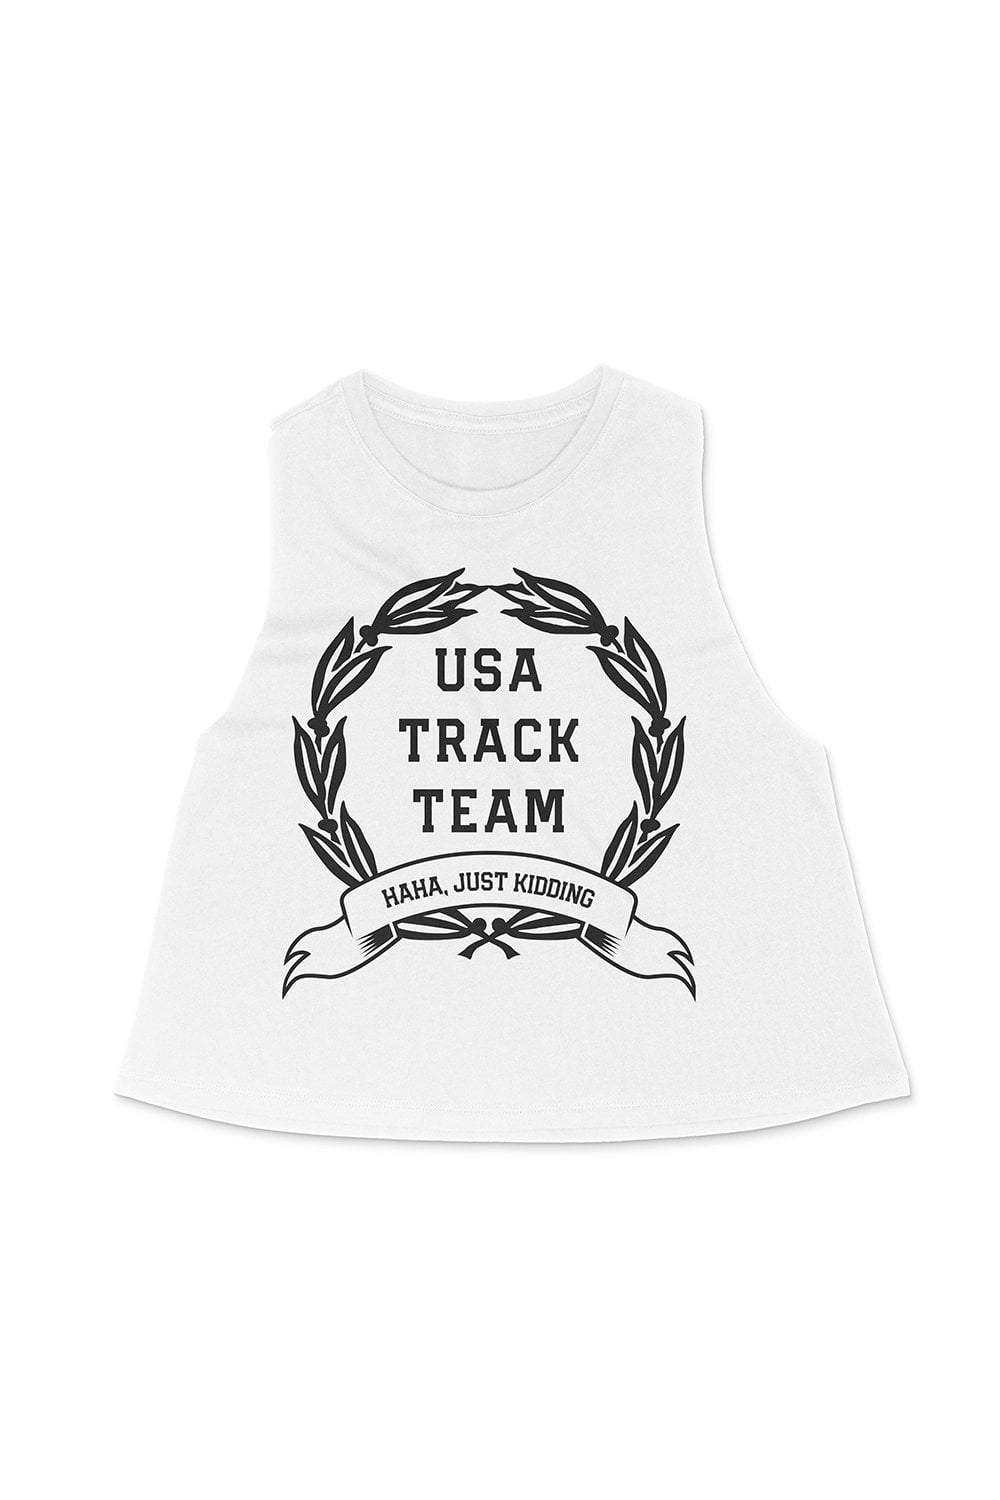 Sarah Marie Design Studio Crop Top Small / White USA Track Team Crop Top